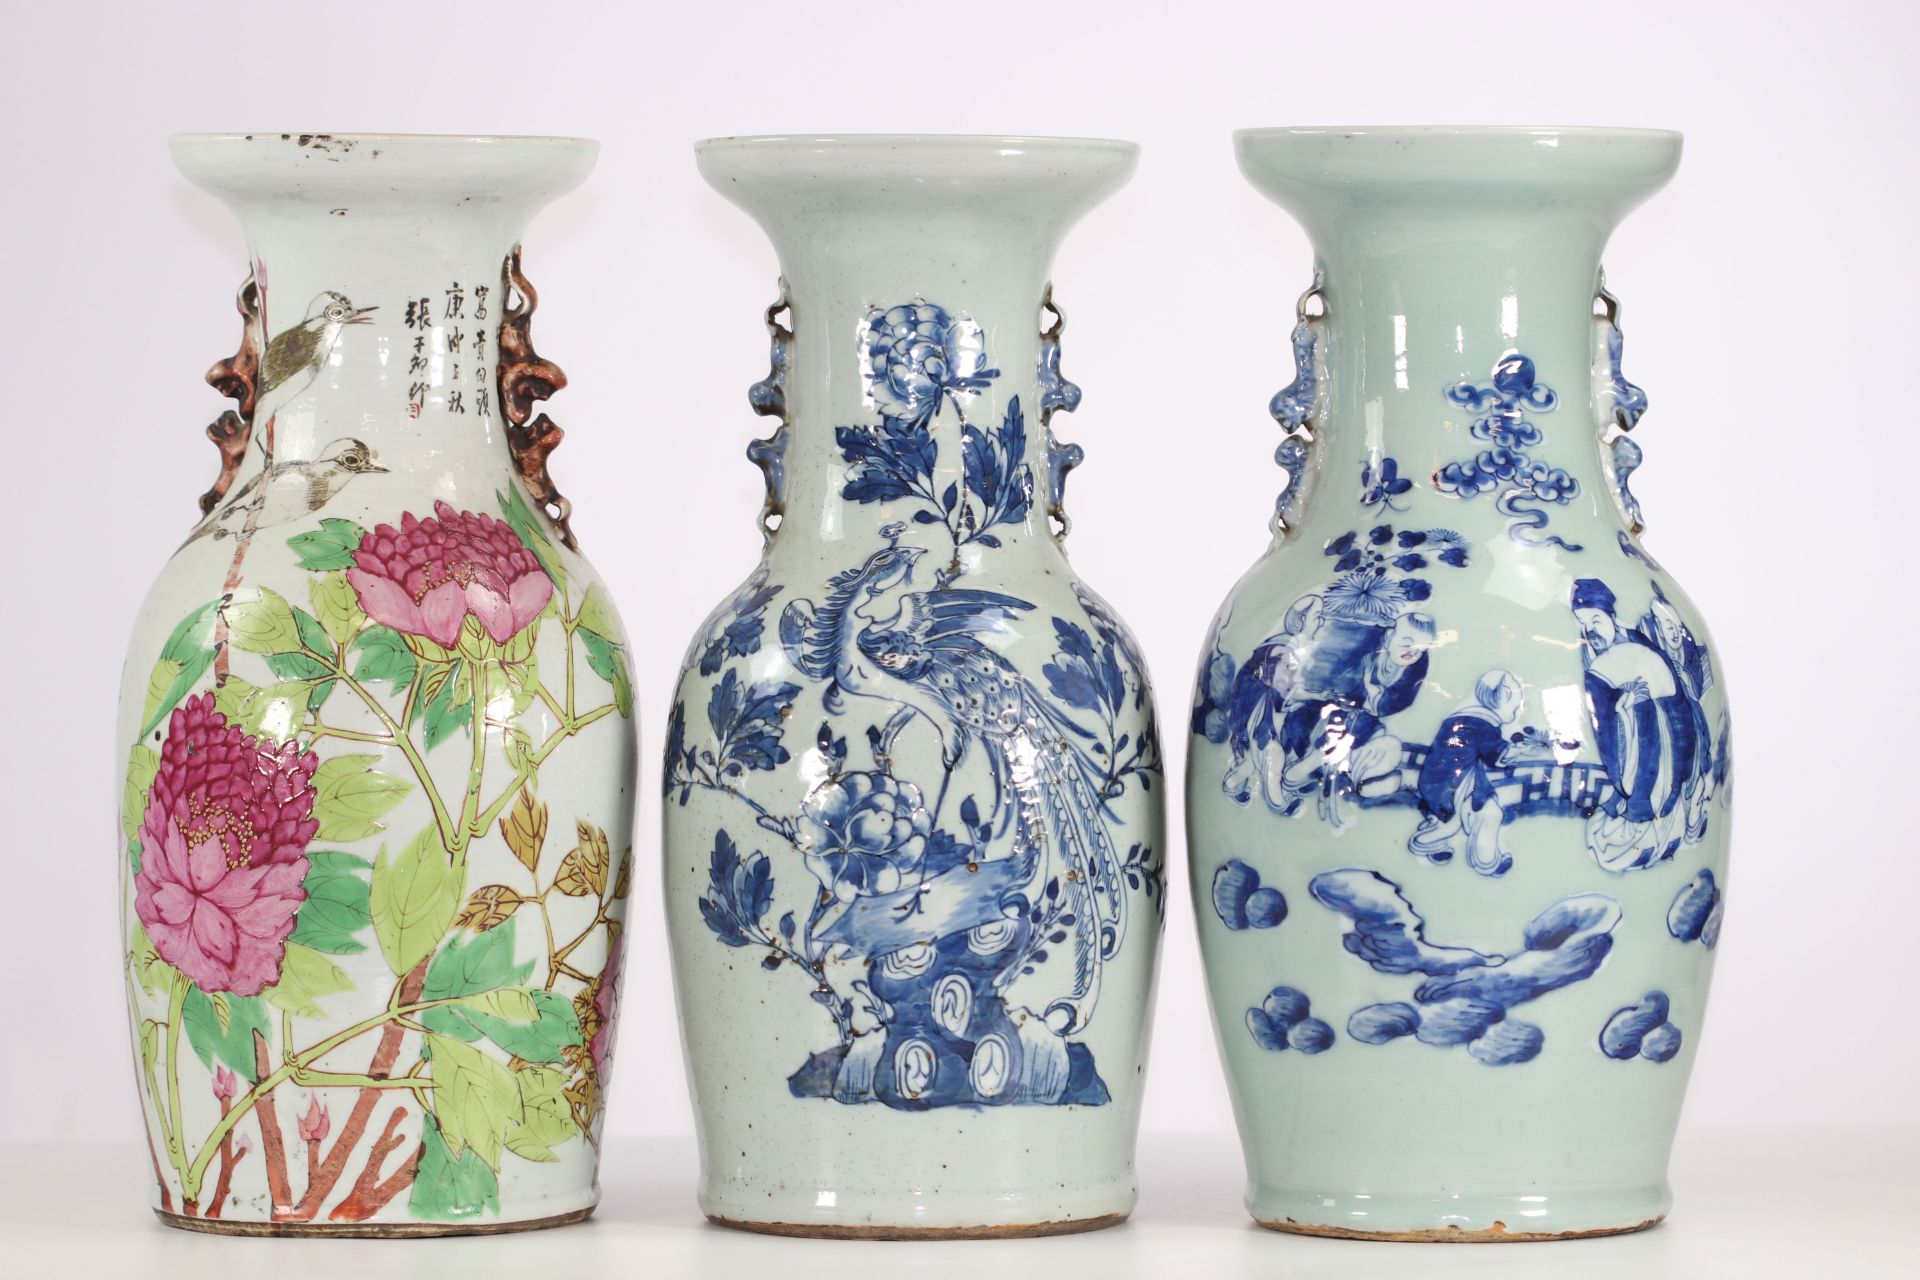 Lot of three porcelain vase two blanc-bleu and one in qianjiang enamel. China circa 1900.